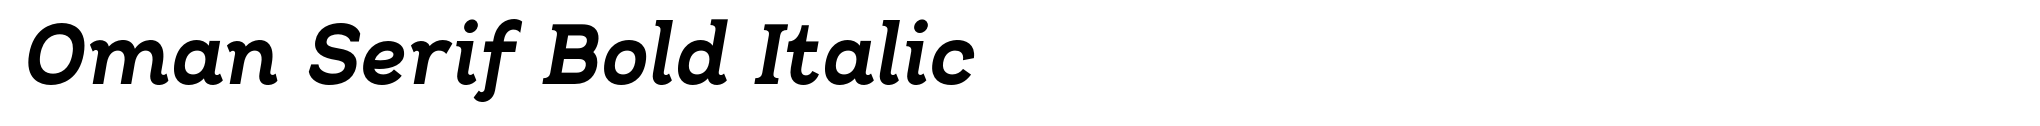 Oman Serif Bold Italic image